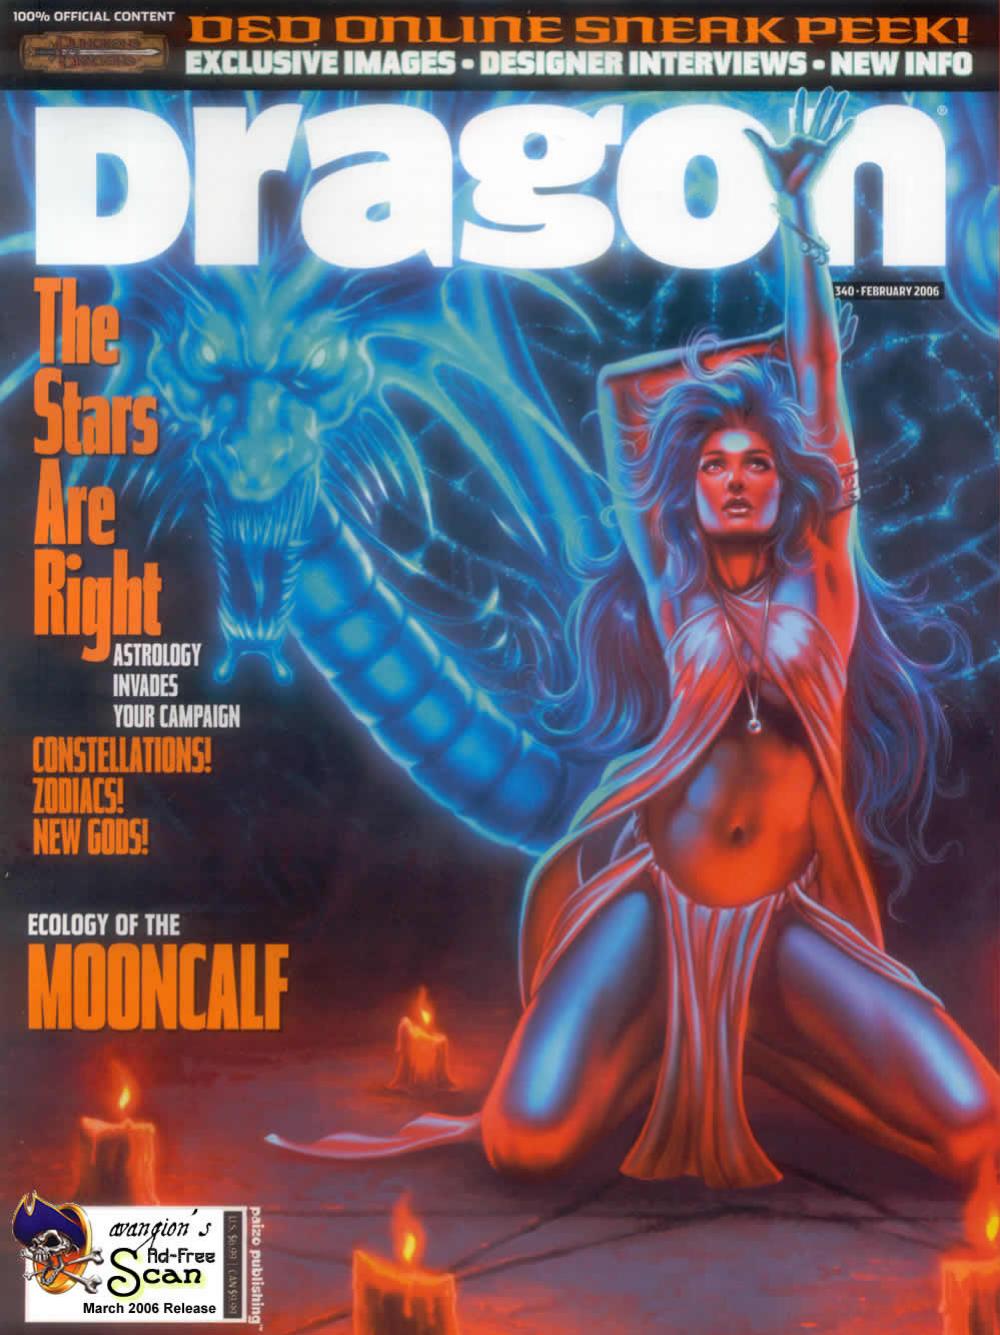 Dragon Magazine #340